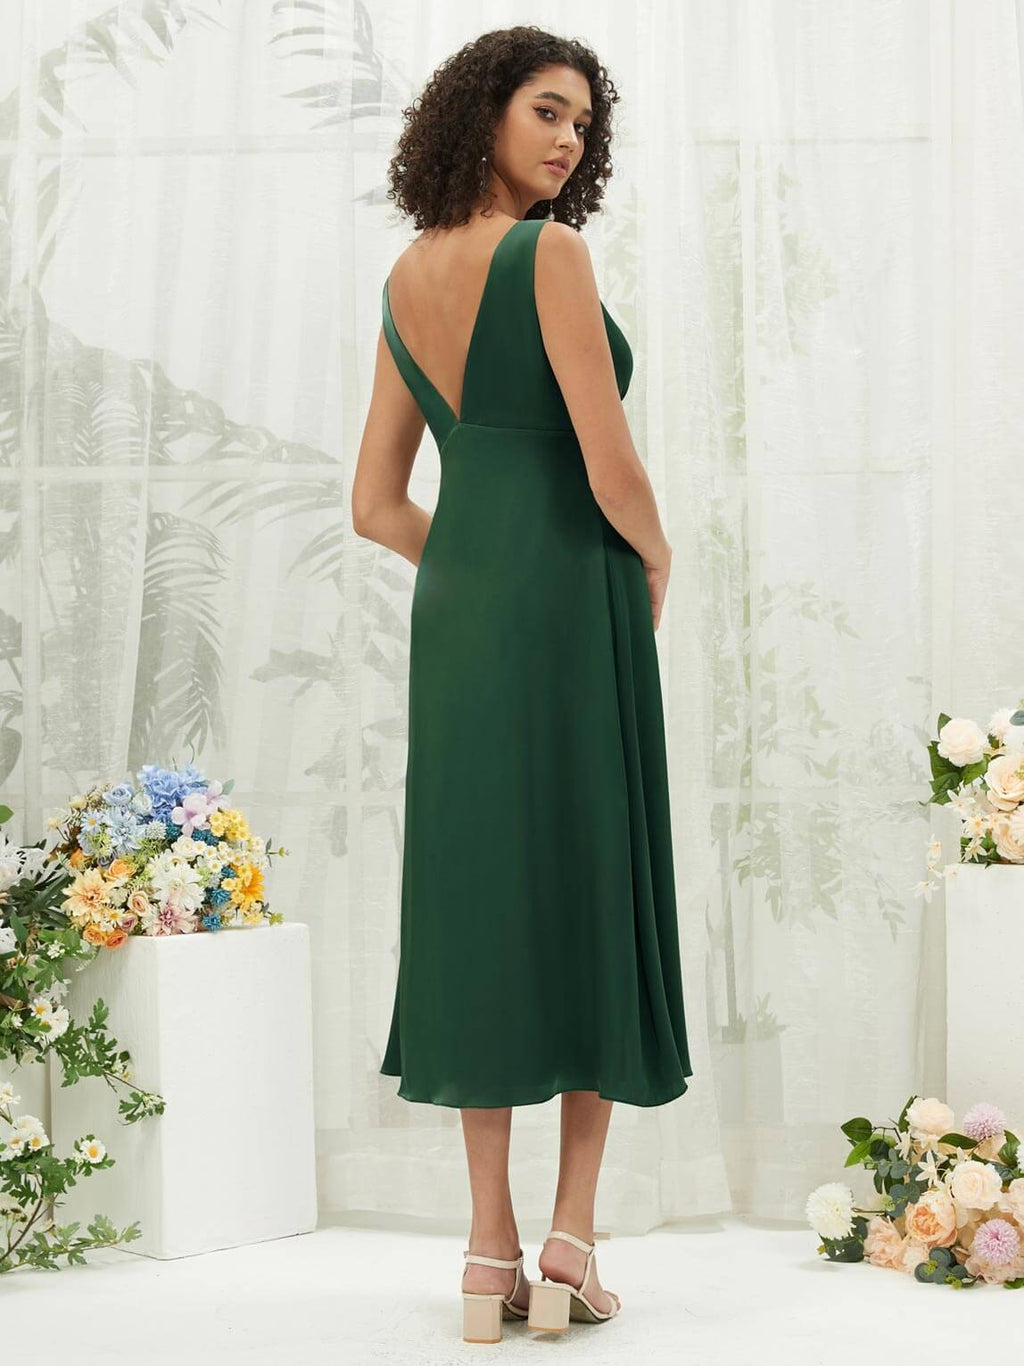 NZ Bridal Emerald Green Detachable Satin Backless bridesmaid dresses BH30512 Gloria a